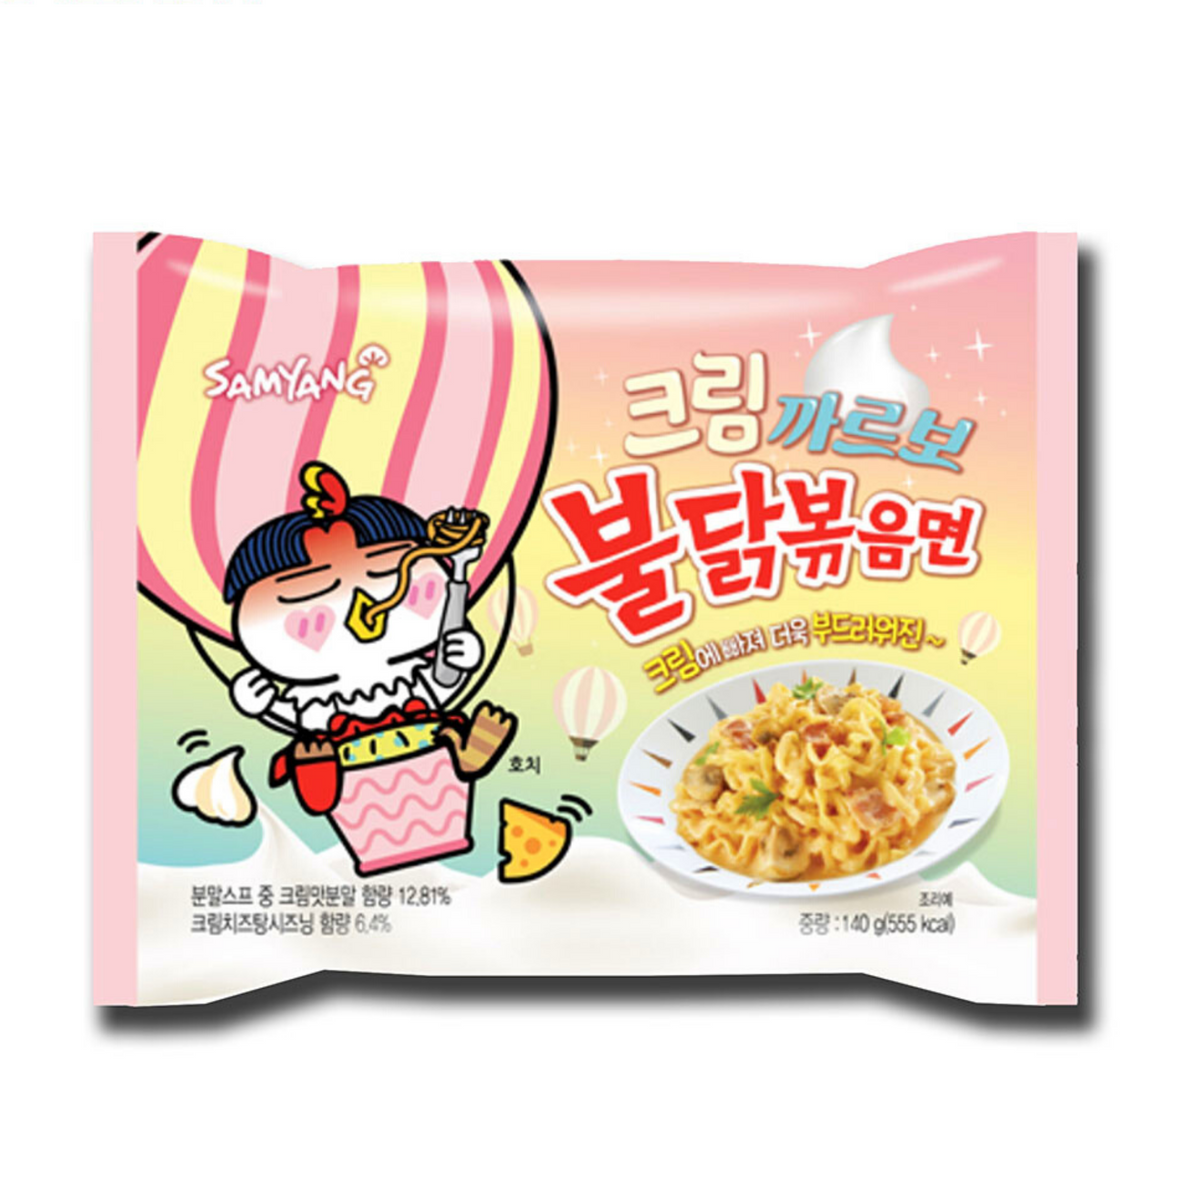 Nouilles instantanées - Hot Chicken Ramen 2x spicy 140g - Samyang